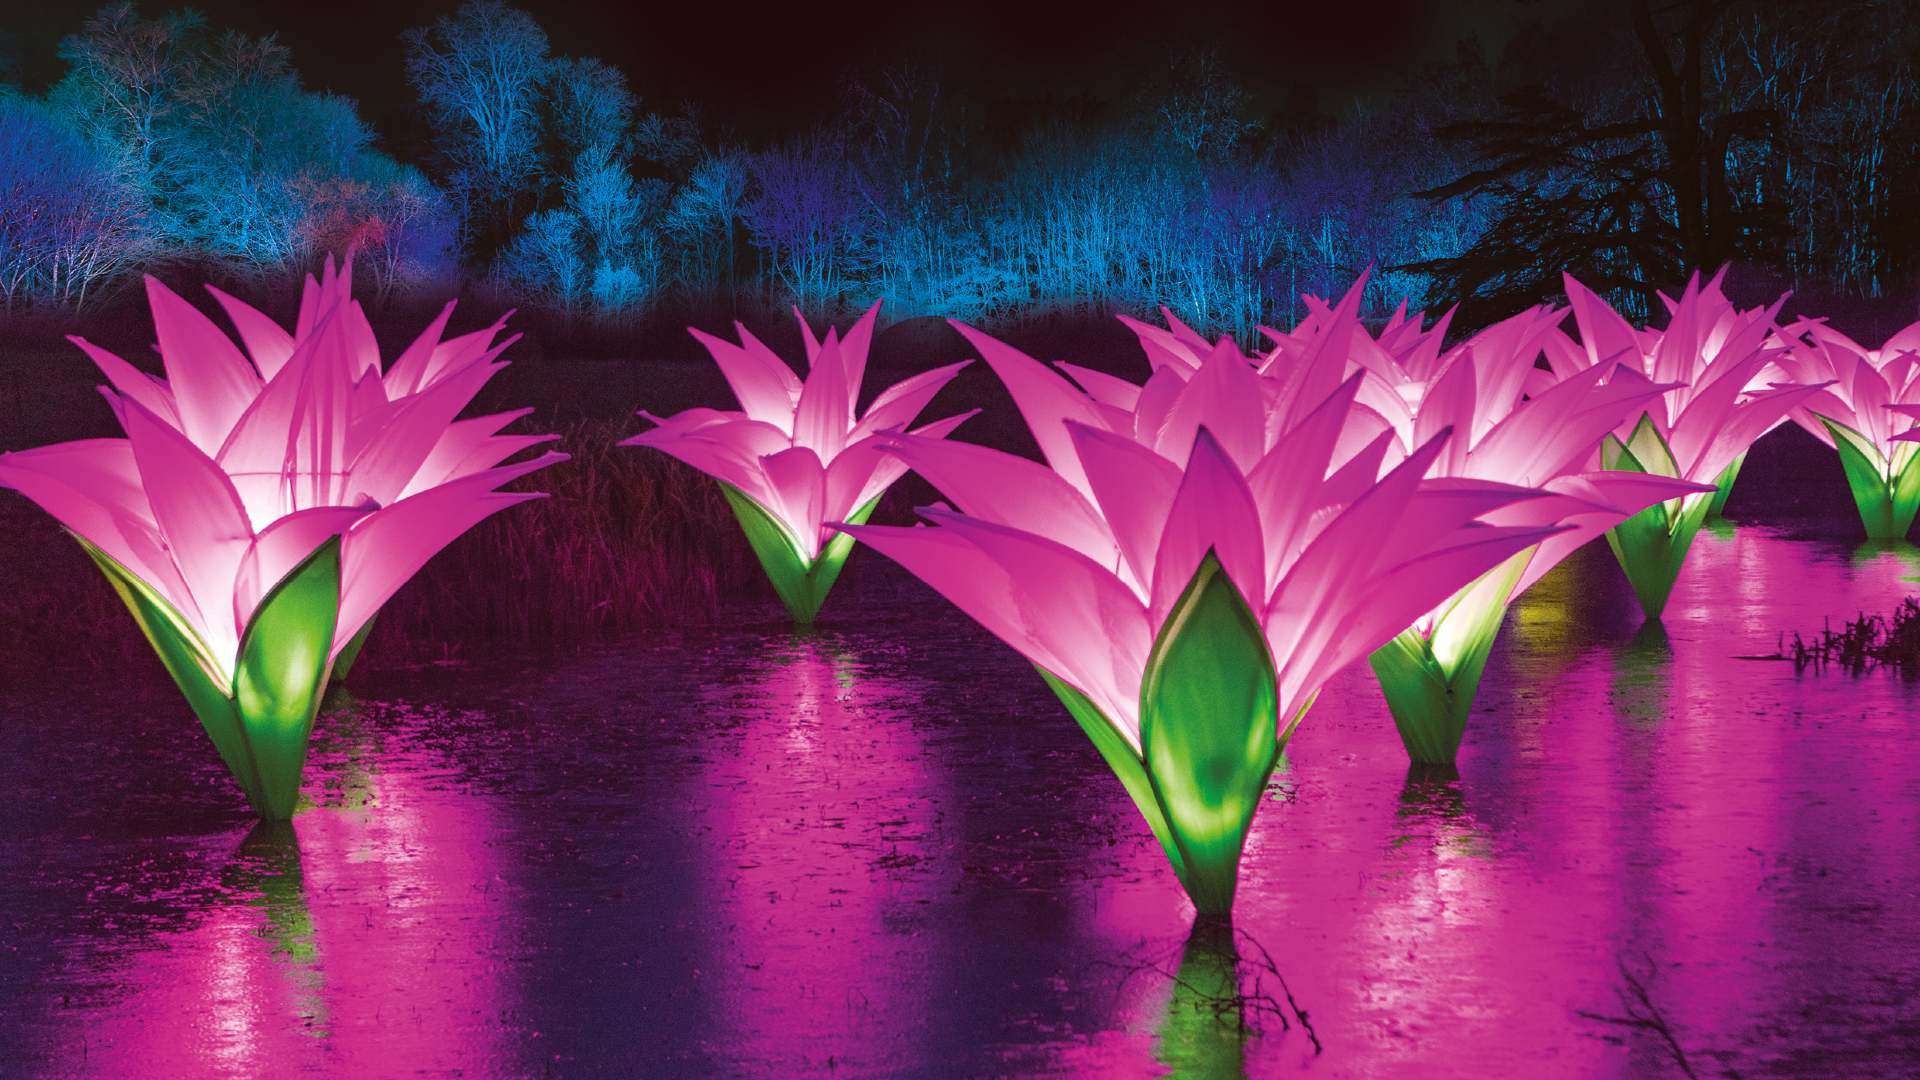 After-Dark Light Festival Lightscape Will Brighten Up the Royal Botanic Garden Sydney This Winter